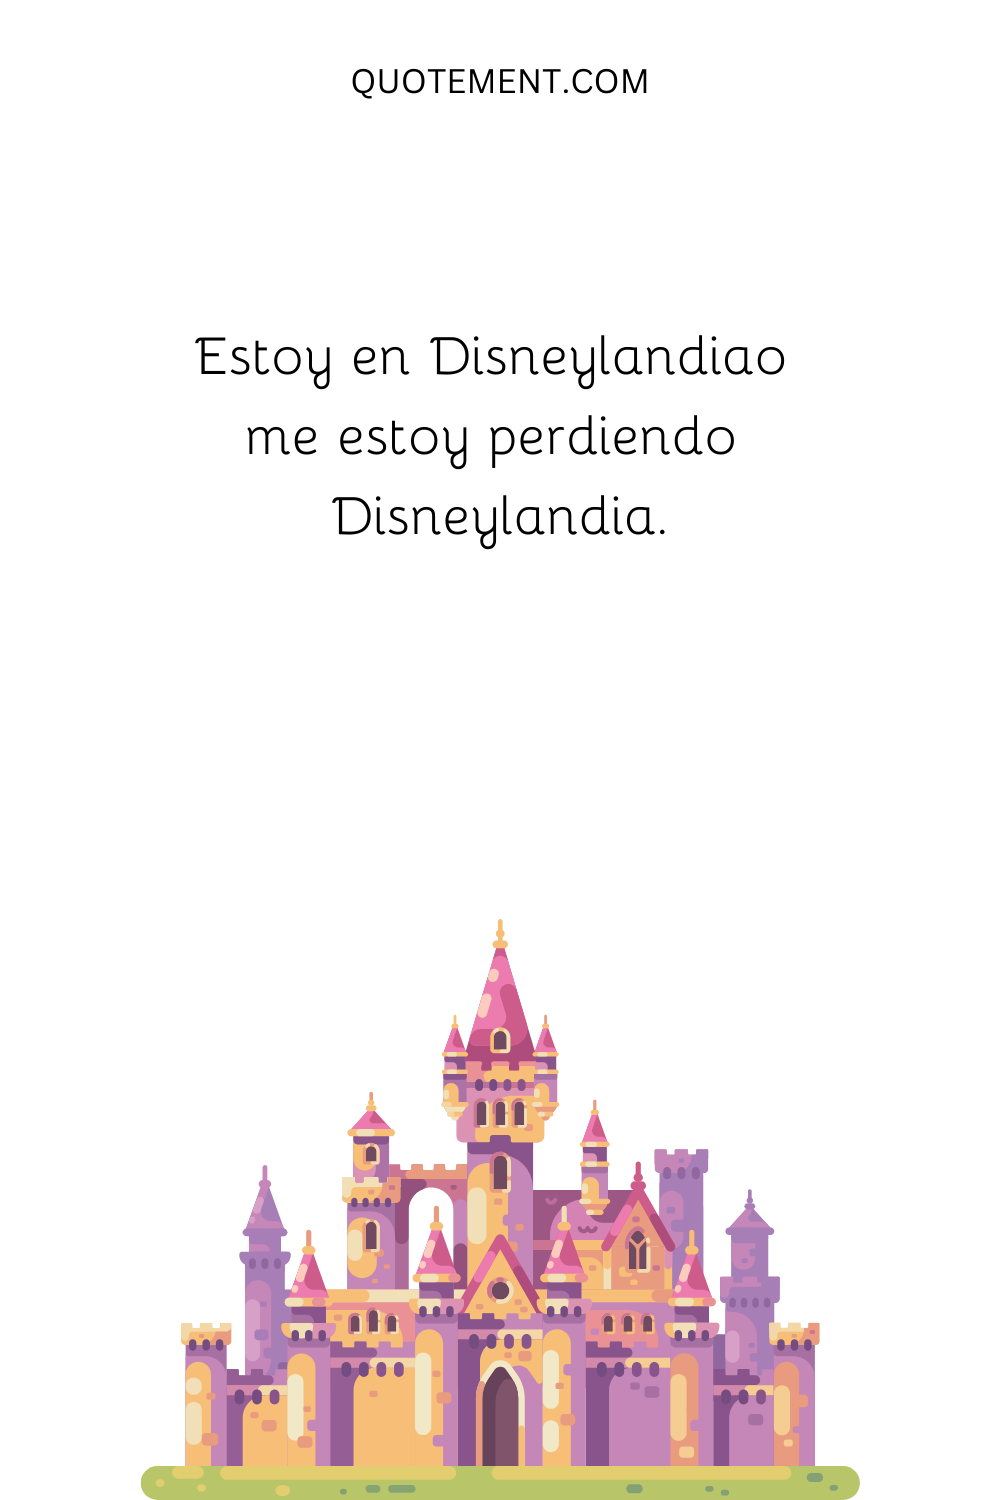 O estoy en Disneylandia, o me estoy perdiendo Disneylandia.